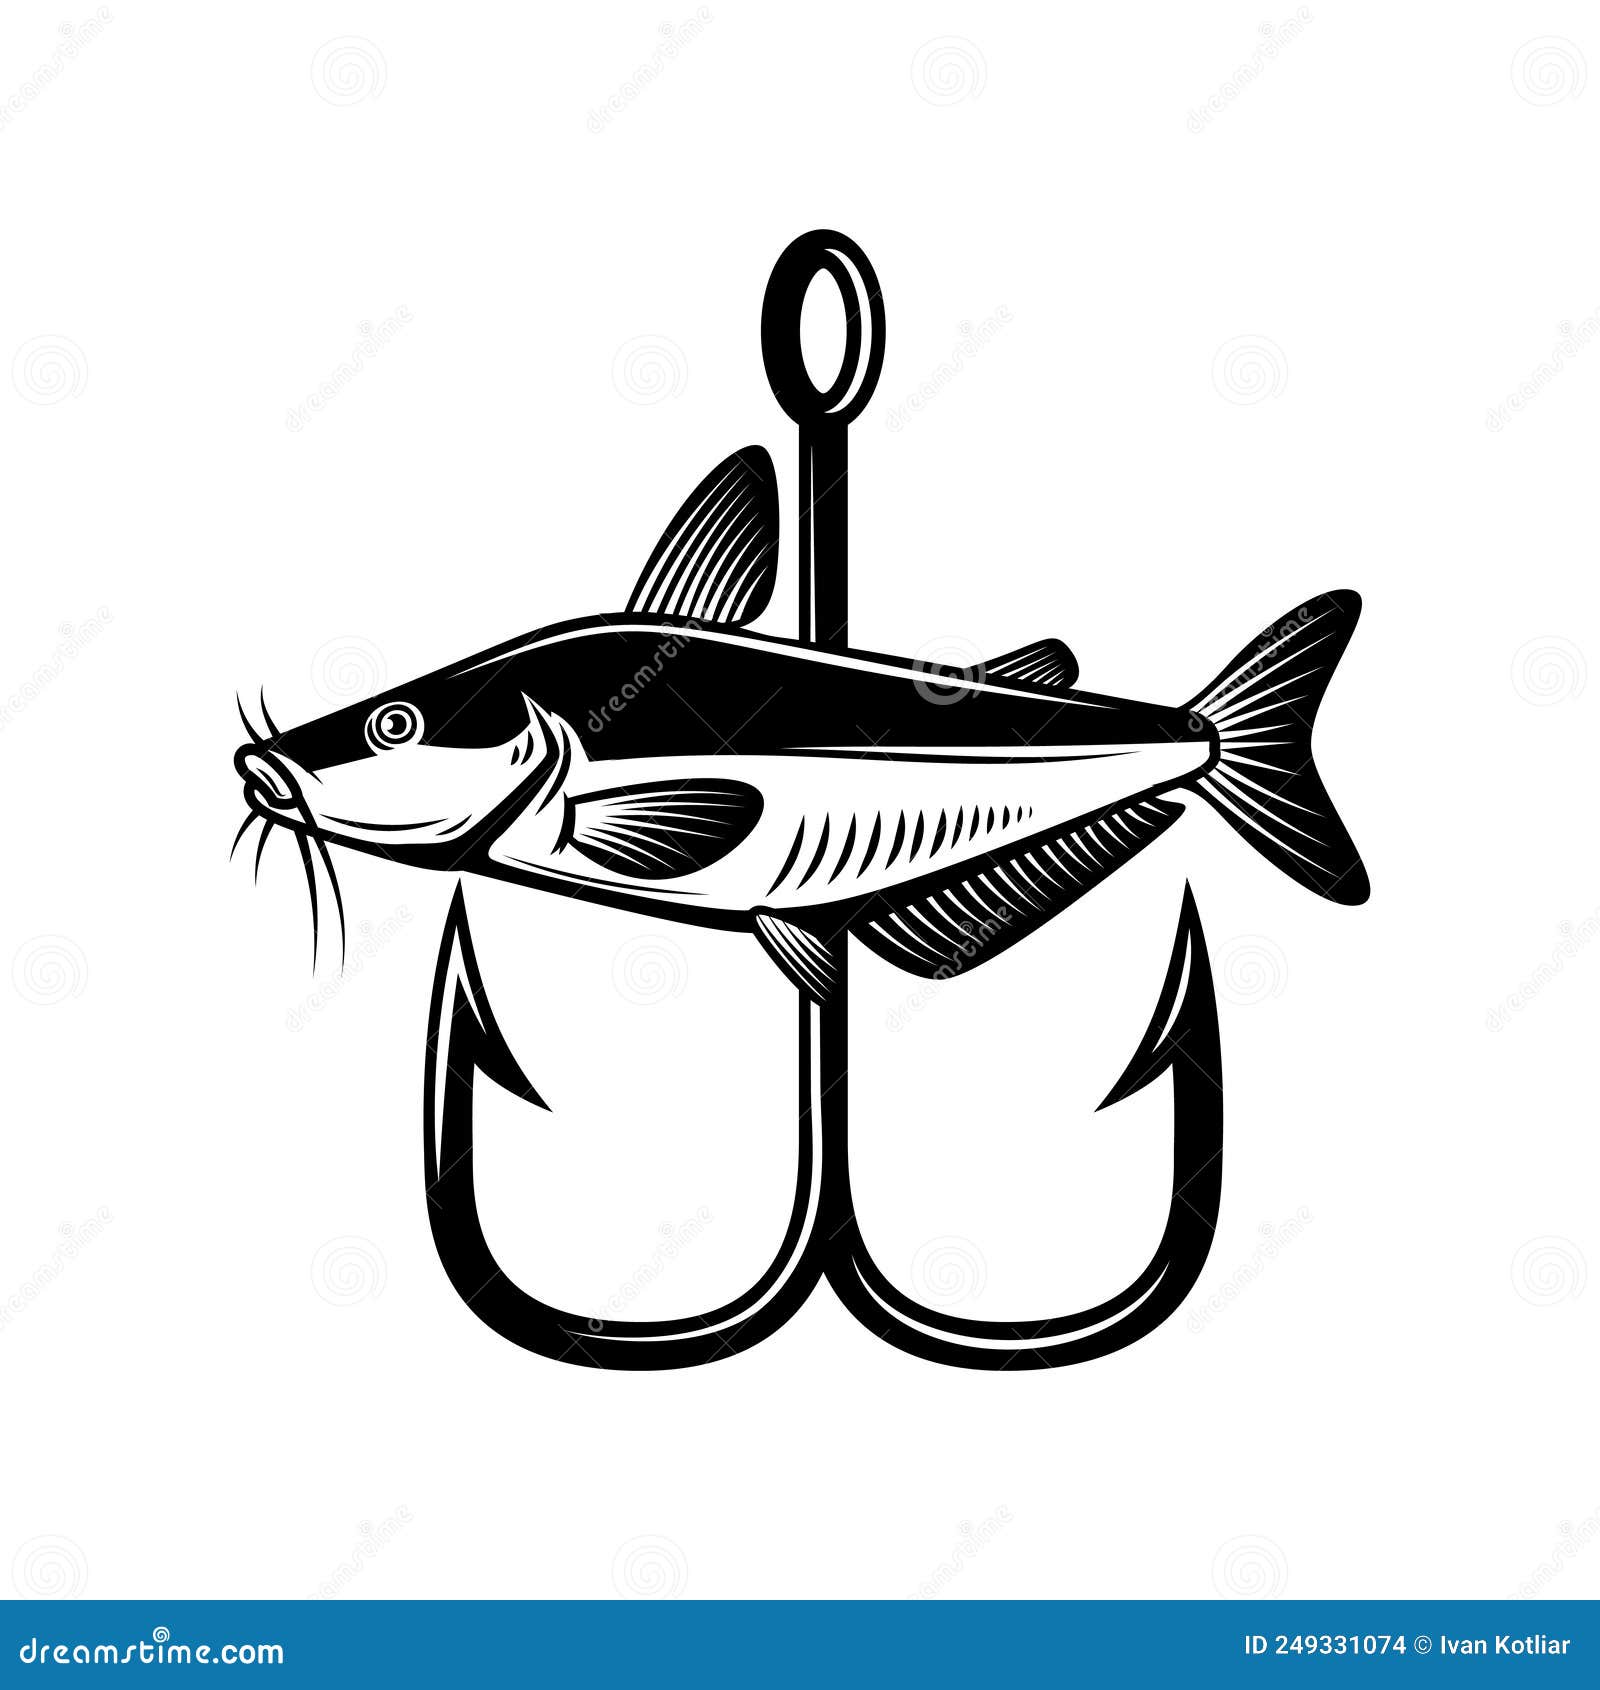 Catfish and Fishing Hook. Design Element for Emblem, Sign, Badge, Logo  Stock Vector - Illustration of equipment, catfish: 249331074